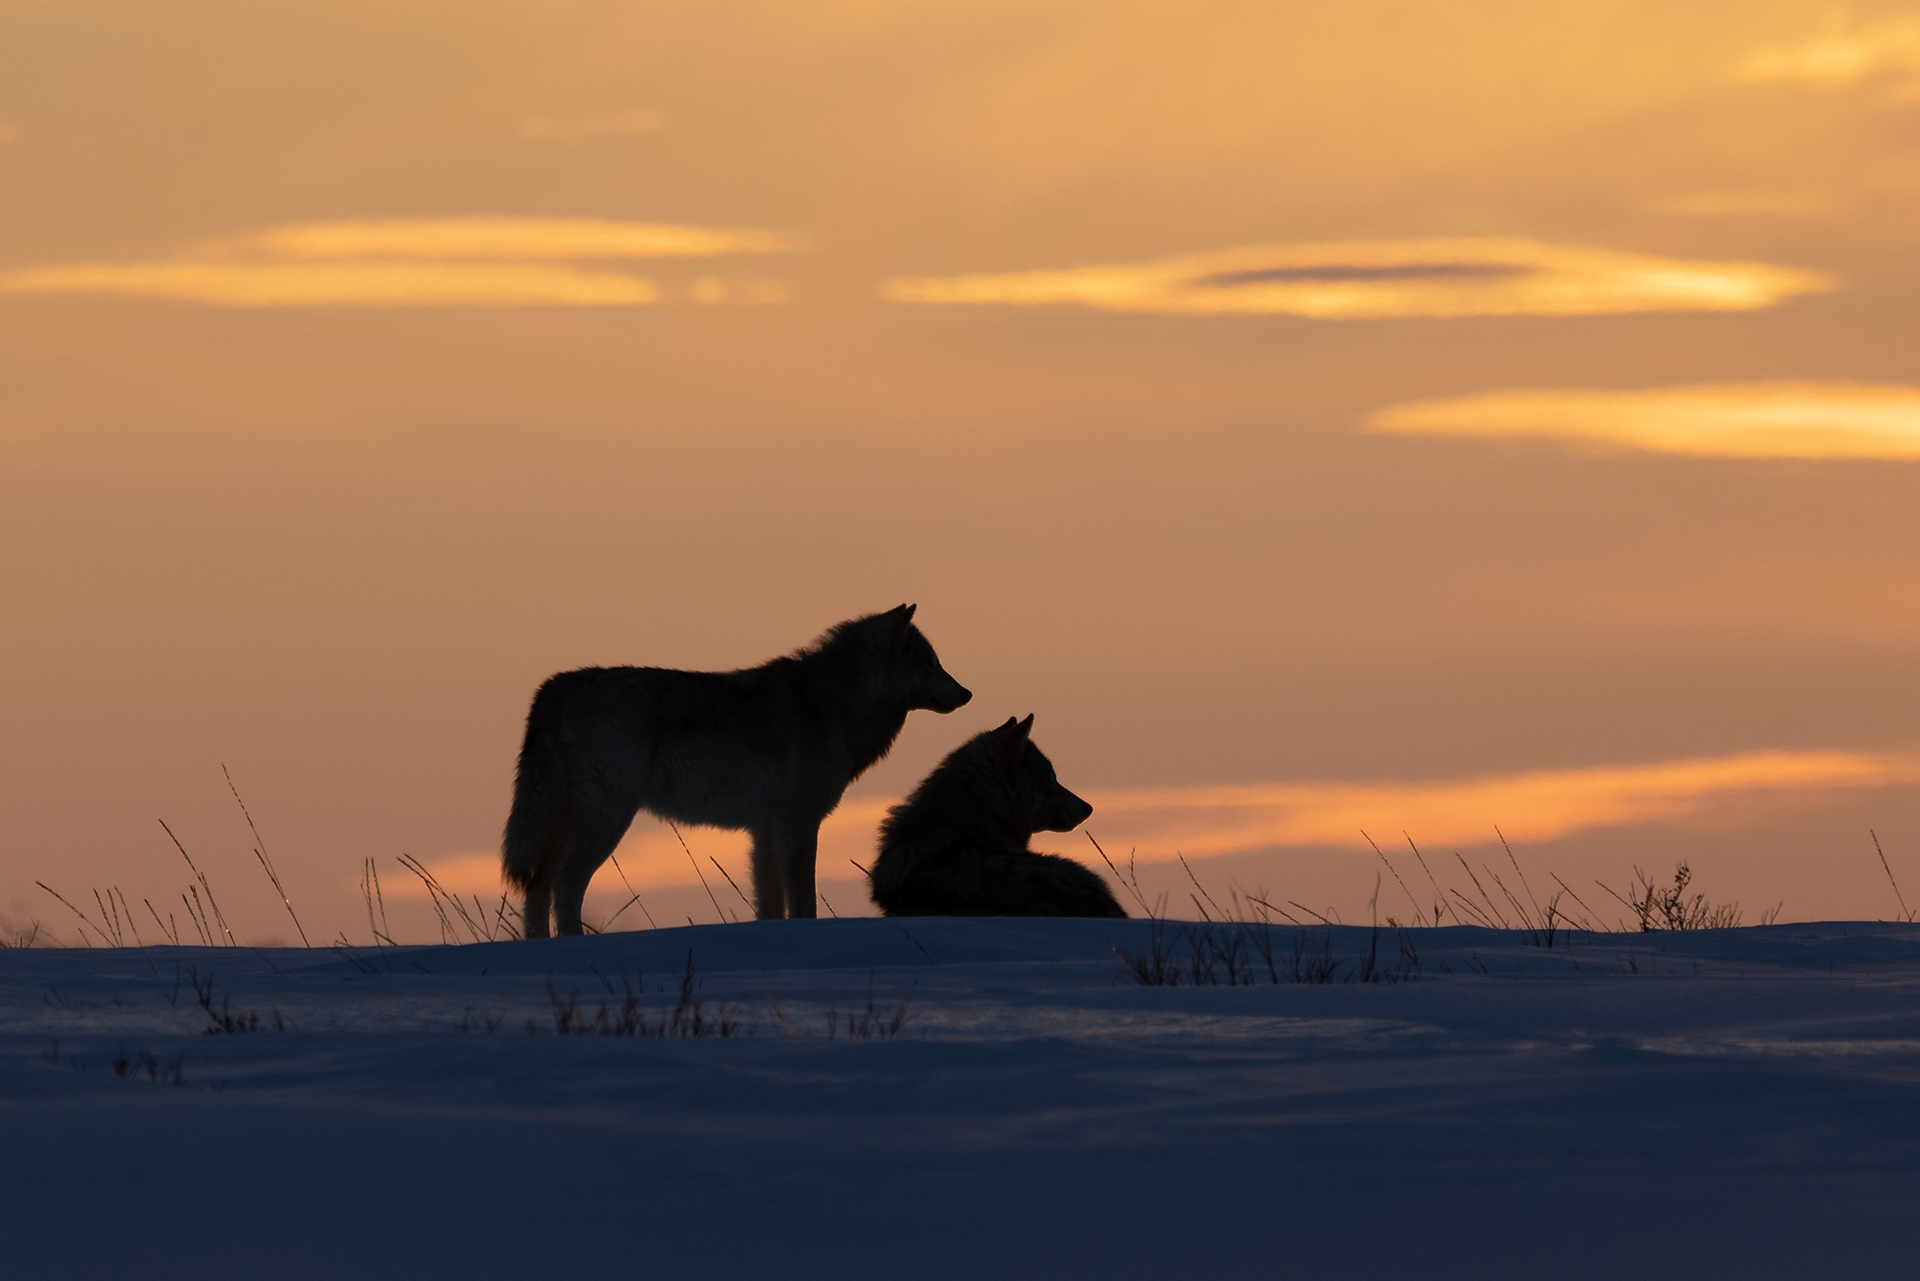 Wolves at sunset. Fabienne Jansen photo.